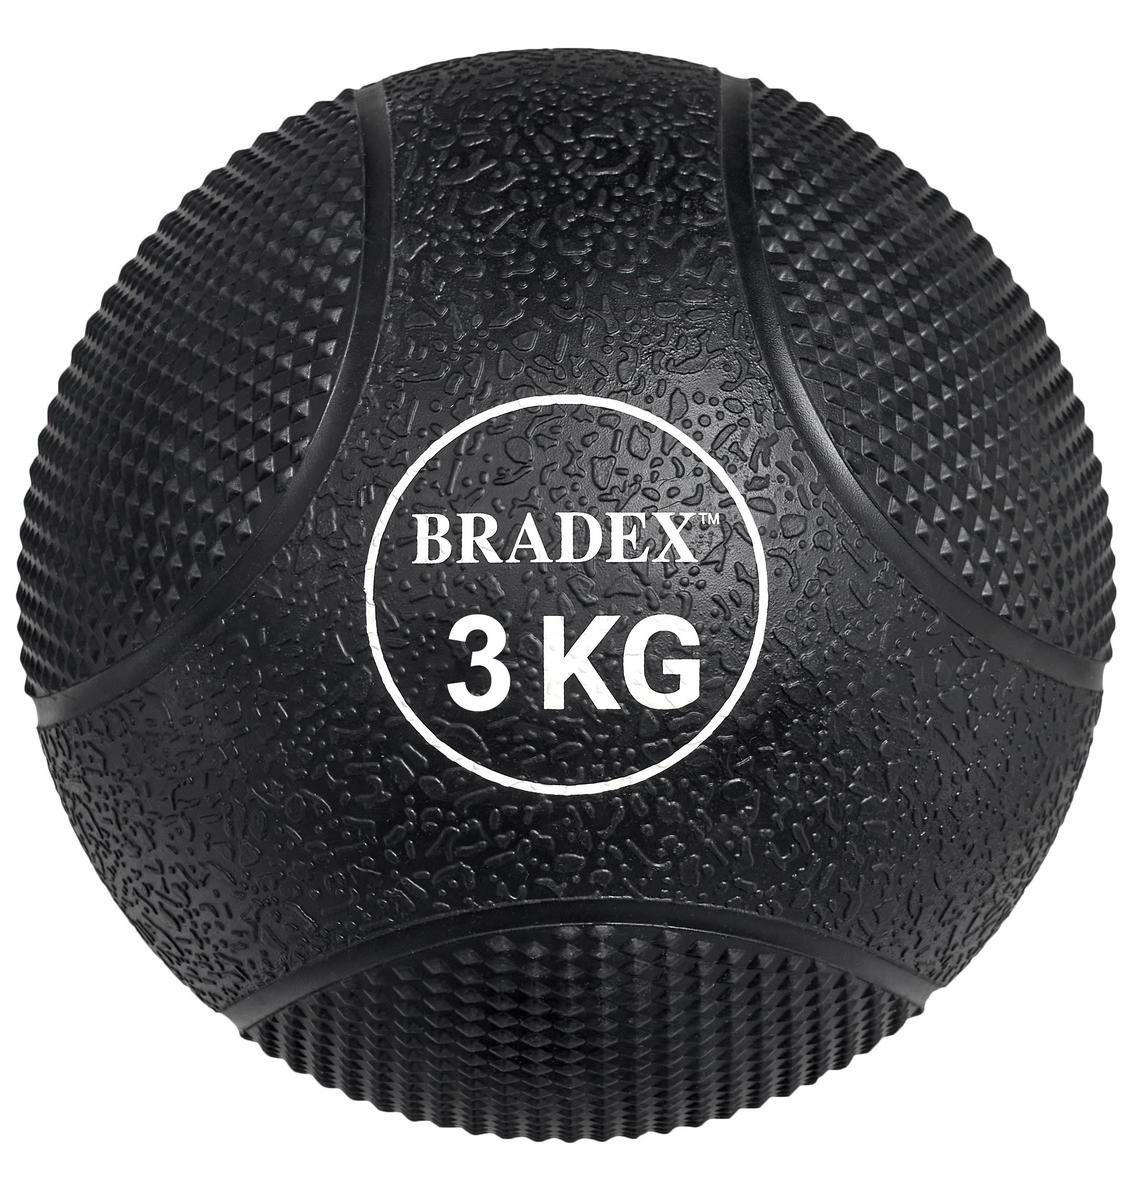 Медбол резиновый Bradex SF 0772, 3 кг